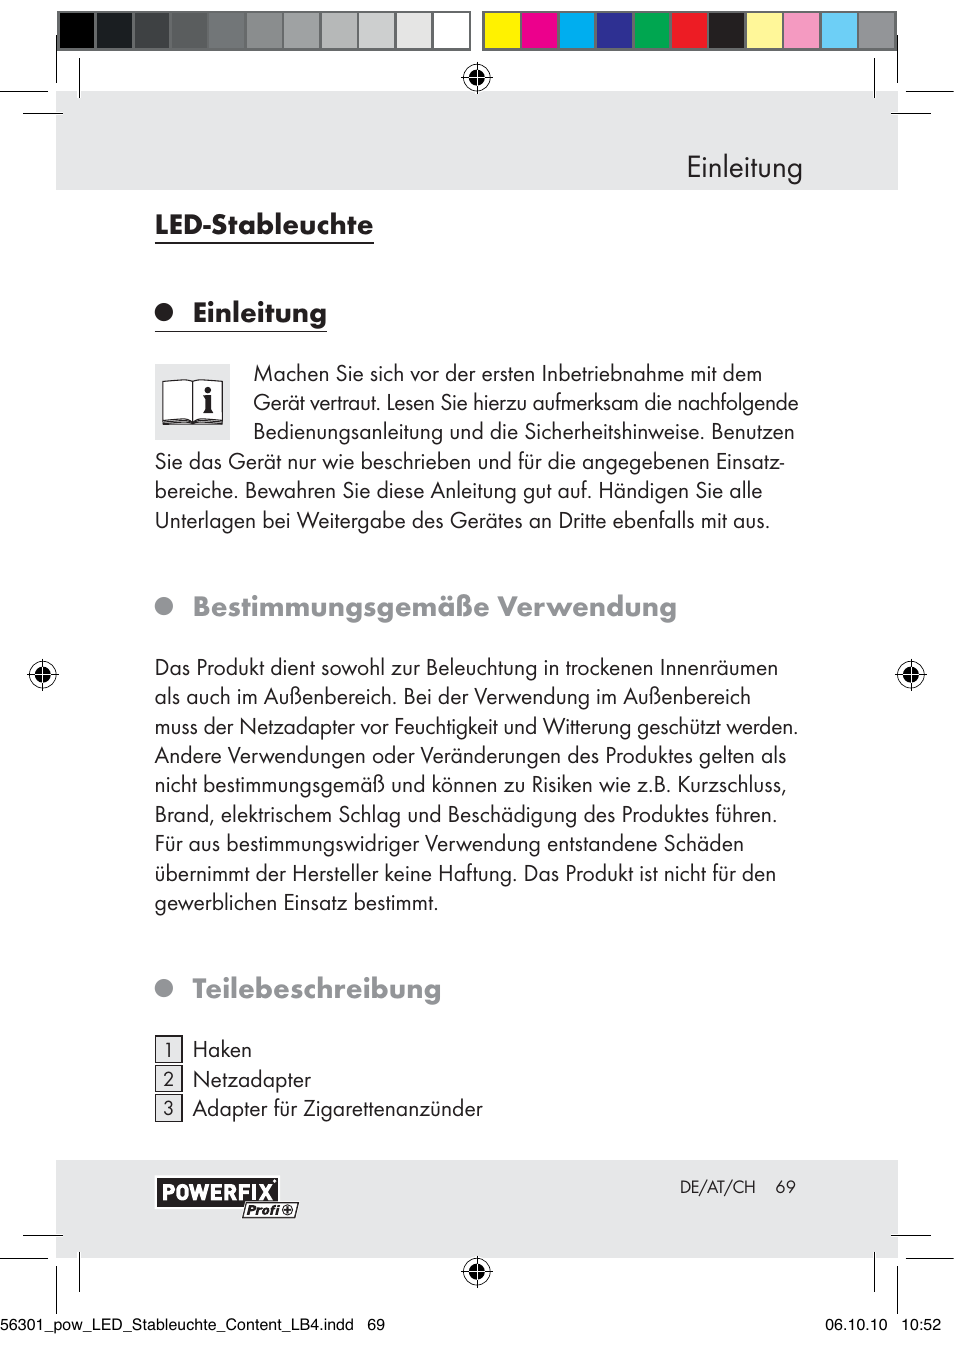 Einleitung, Led-stableuchte, Bestimmungsgemäße verwendung | Powerfix  Z30590-BS User Manual | Page 69 / 78 | Original mode